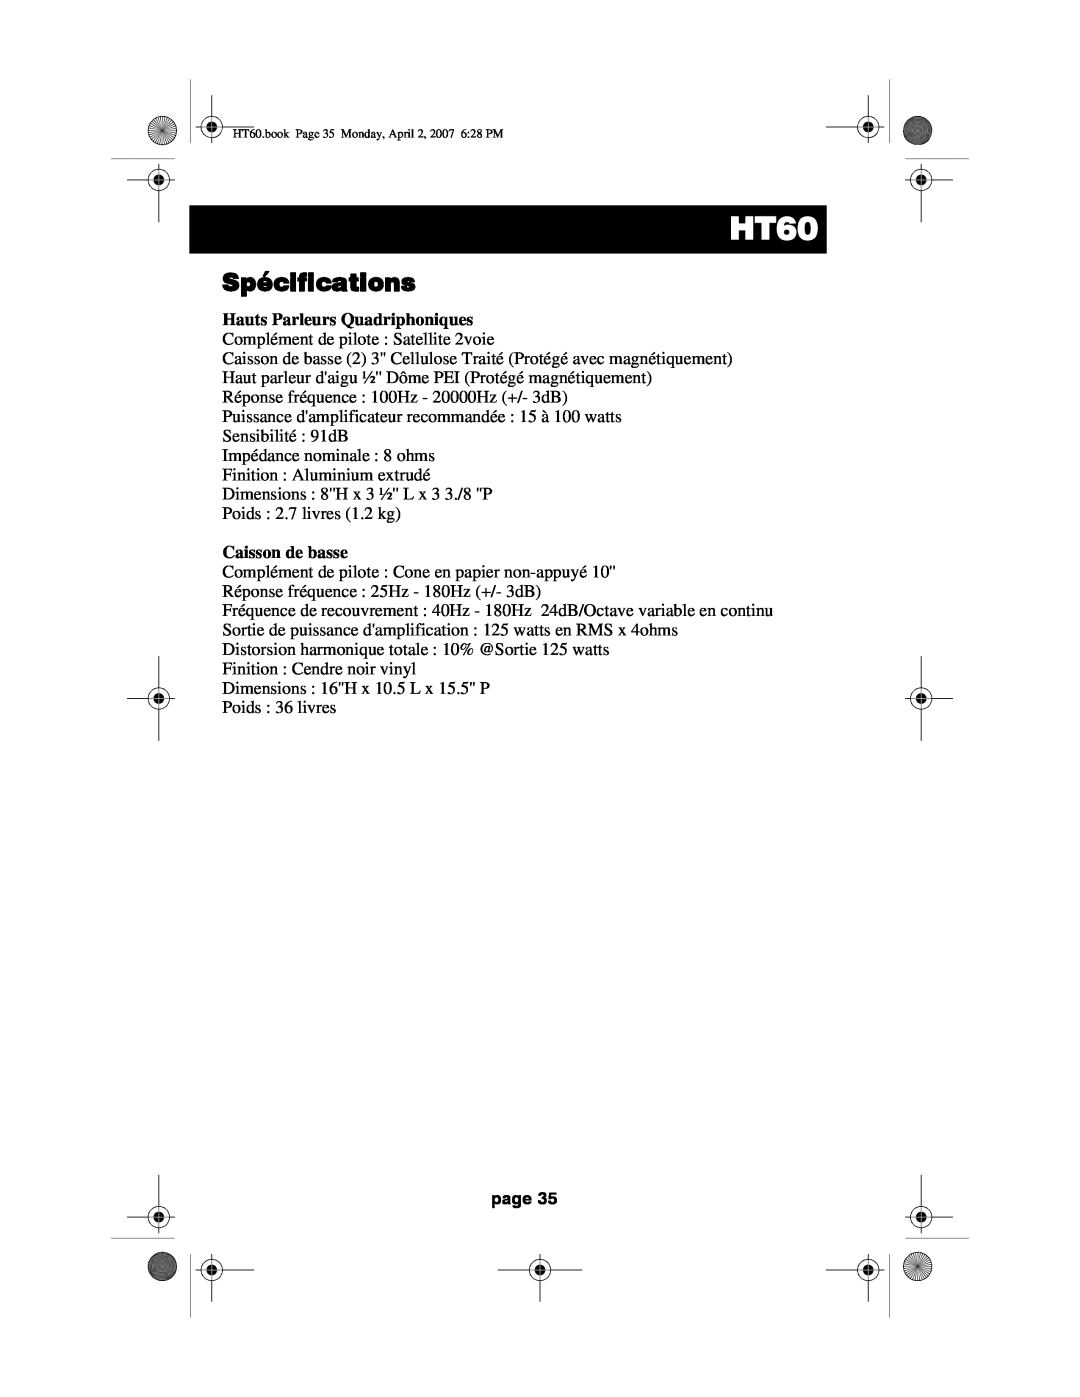 Acoustic Research HT60 operation manual Spécifications, Caisson de basse, page 